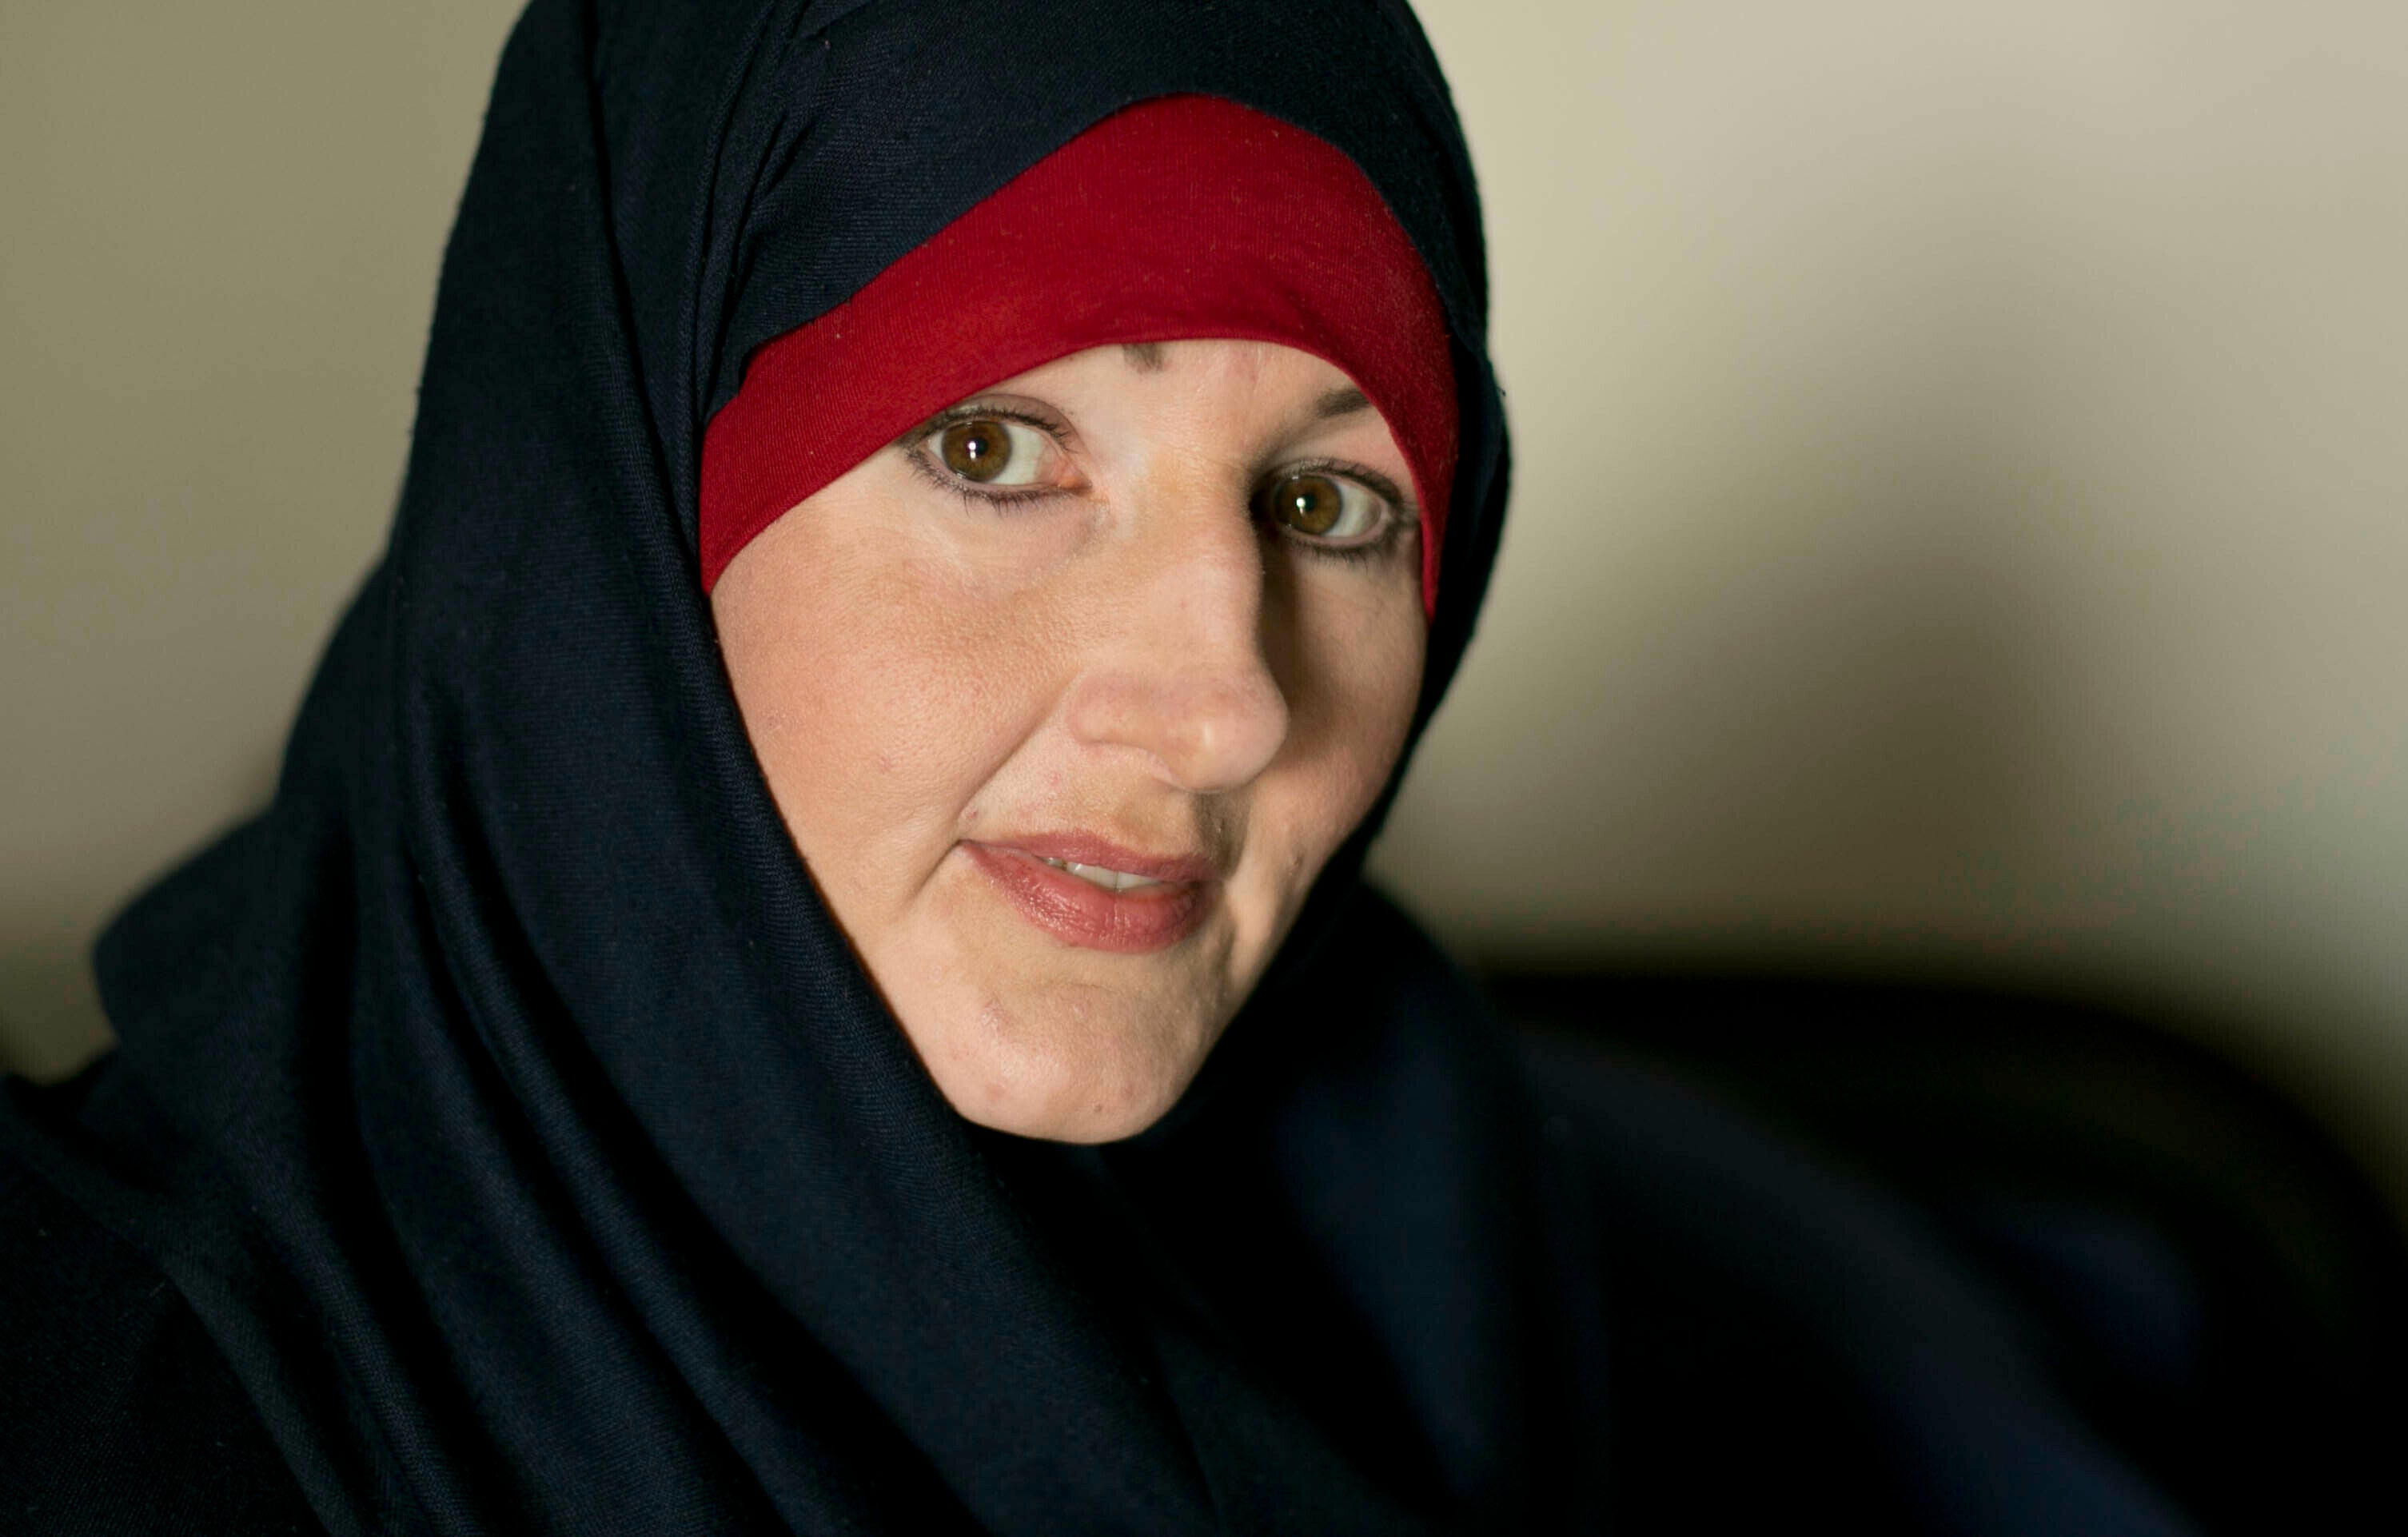 A woman poses wearing a hijab